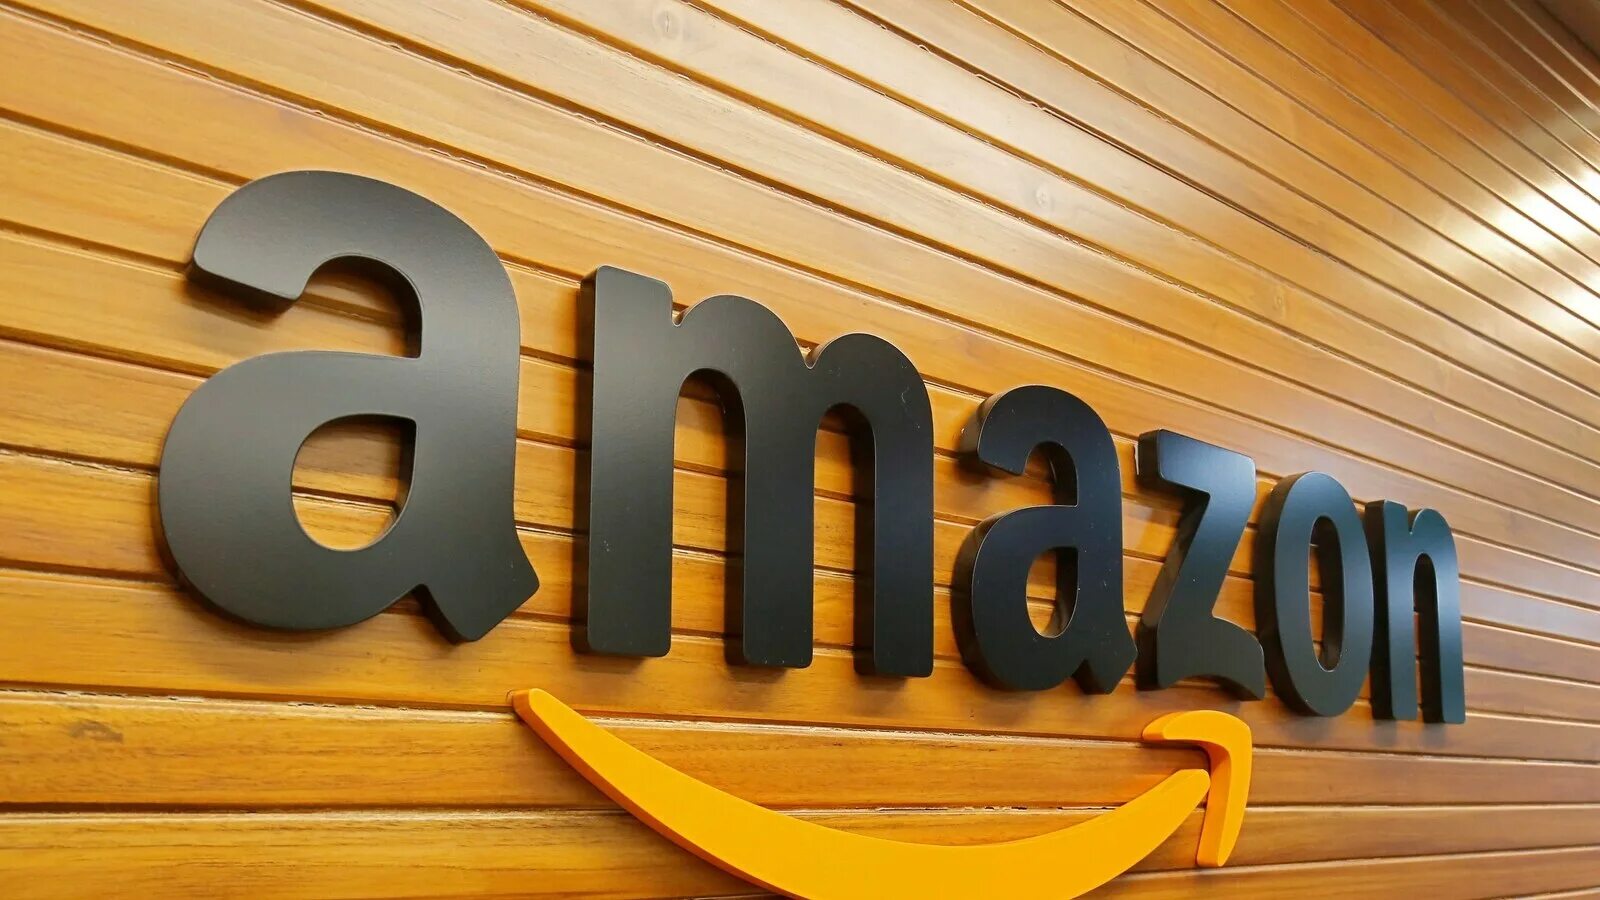 Амазон картинки для презентации. Amazon Company. Логотип Amazon картинки. Амазон PNG. Amazon d